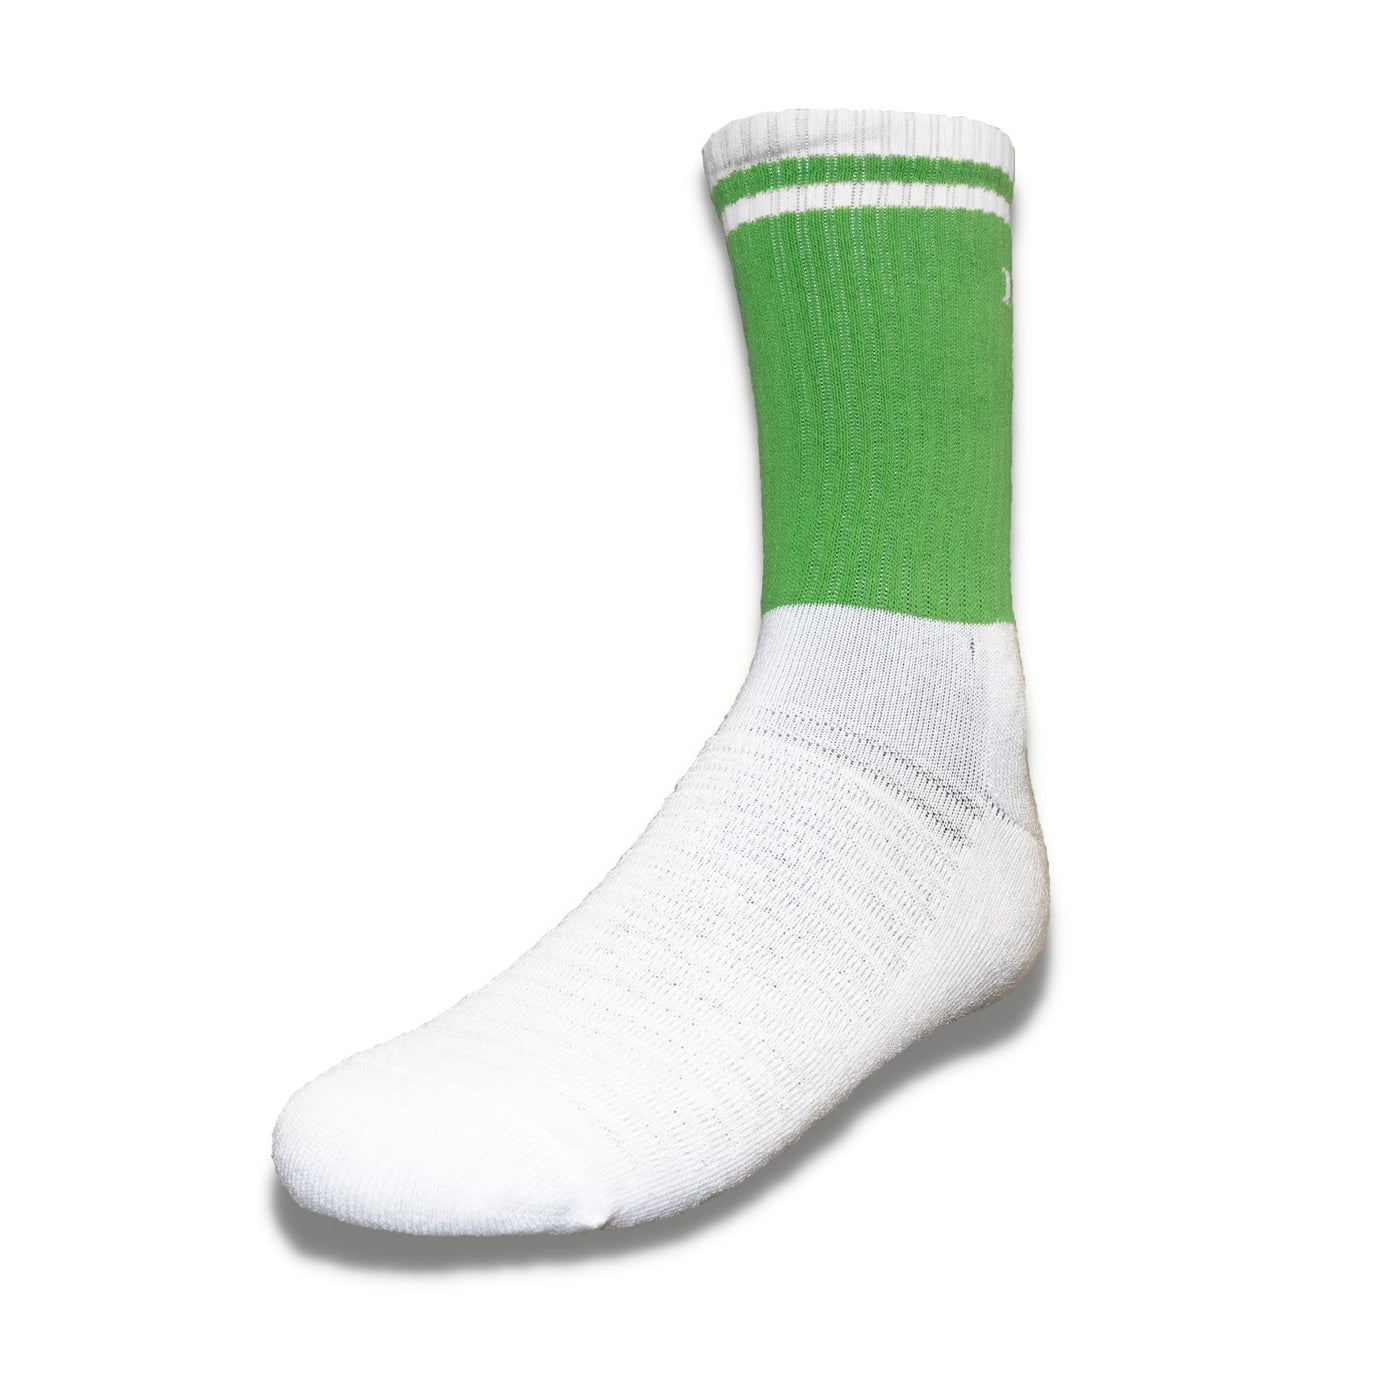 Midi Socks- Green and White